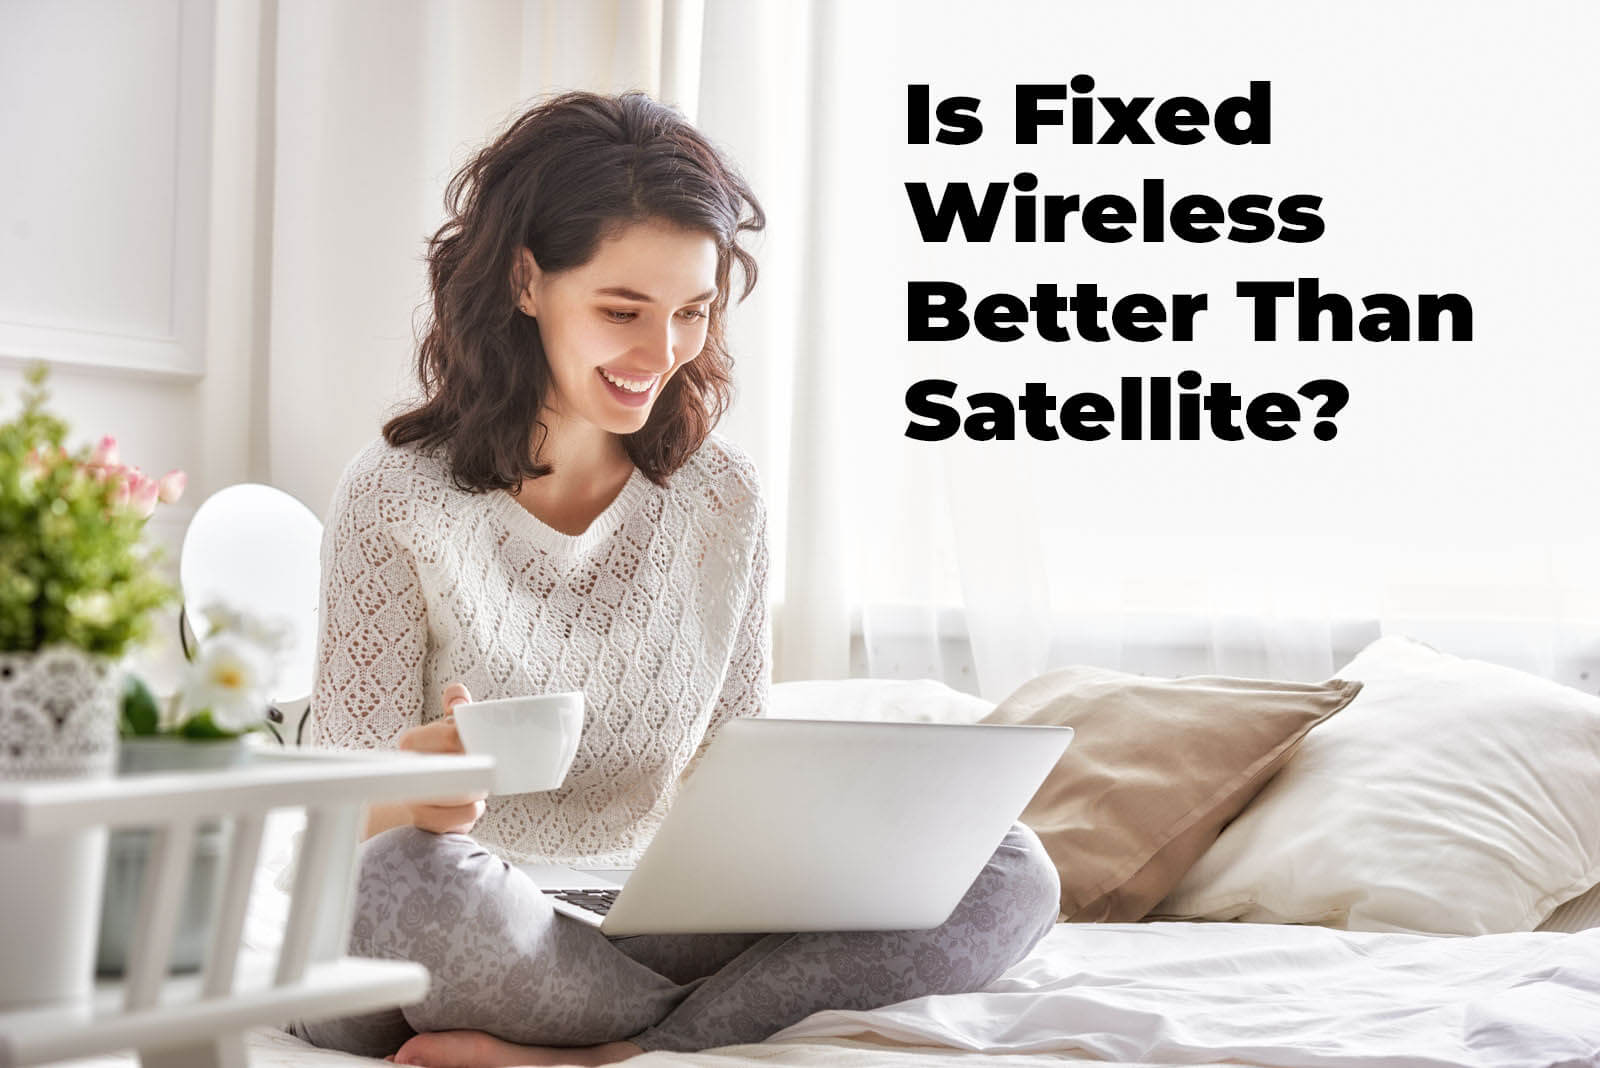 https://compareinternet.com/blog/fixed-wireless-satellite/